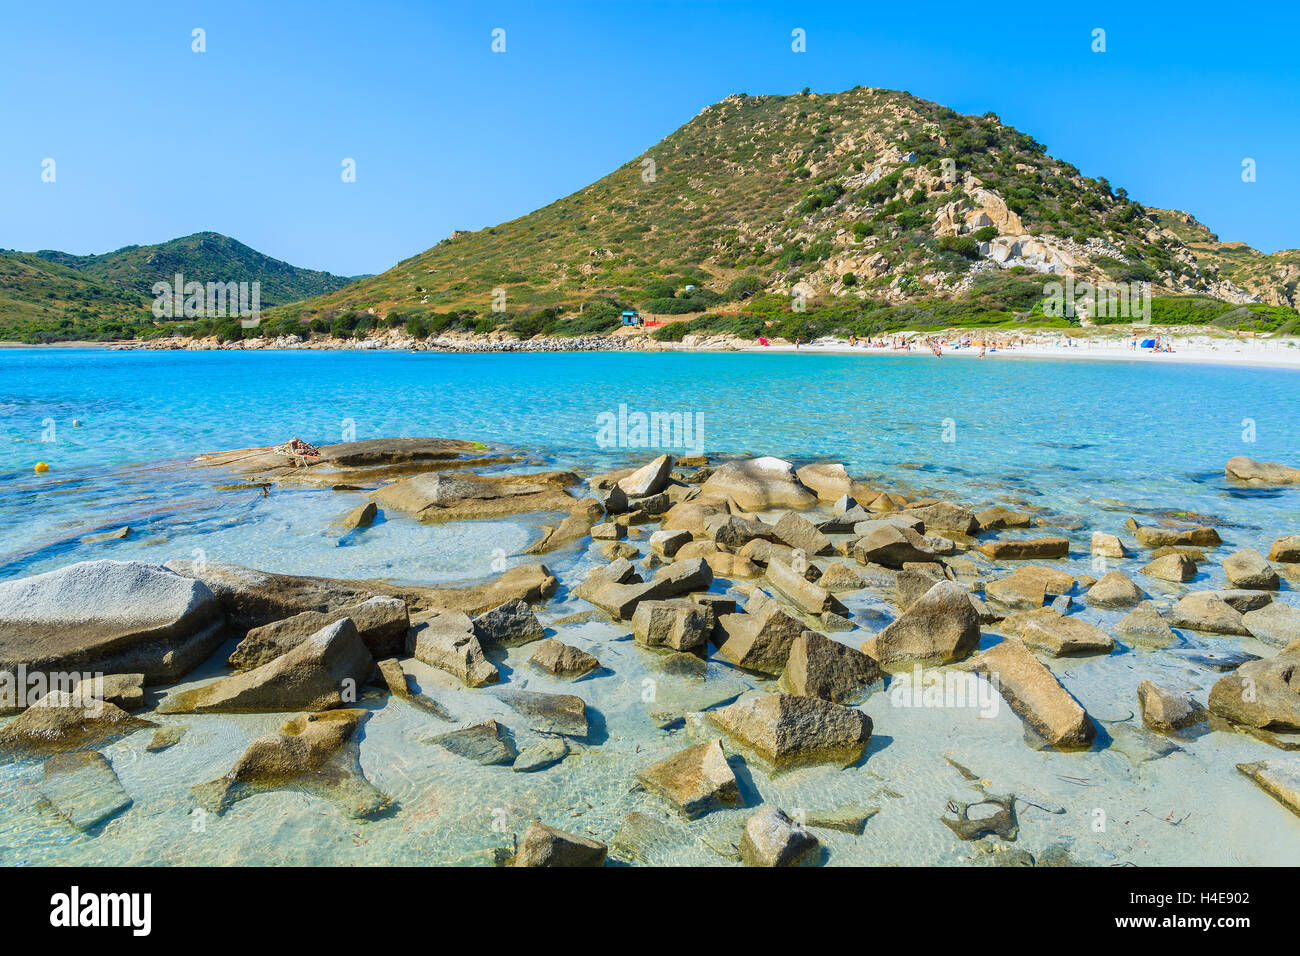 Stones in Punta Molentis bay and beach view, Sardinia island, Italy Stock Photo